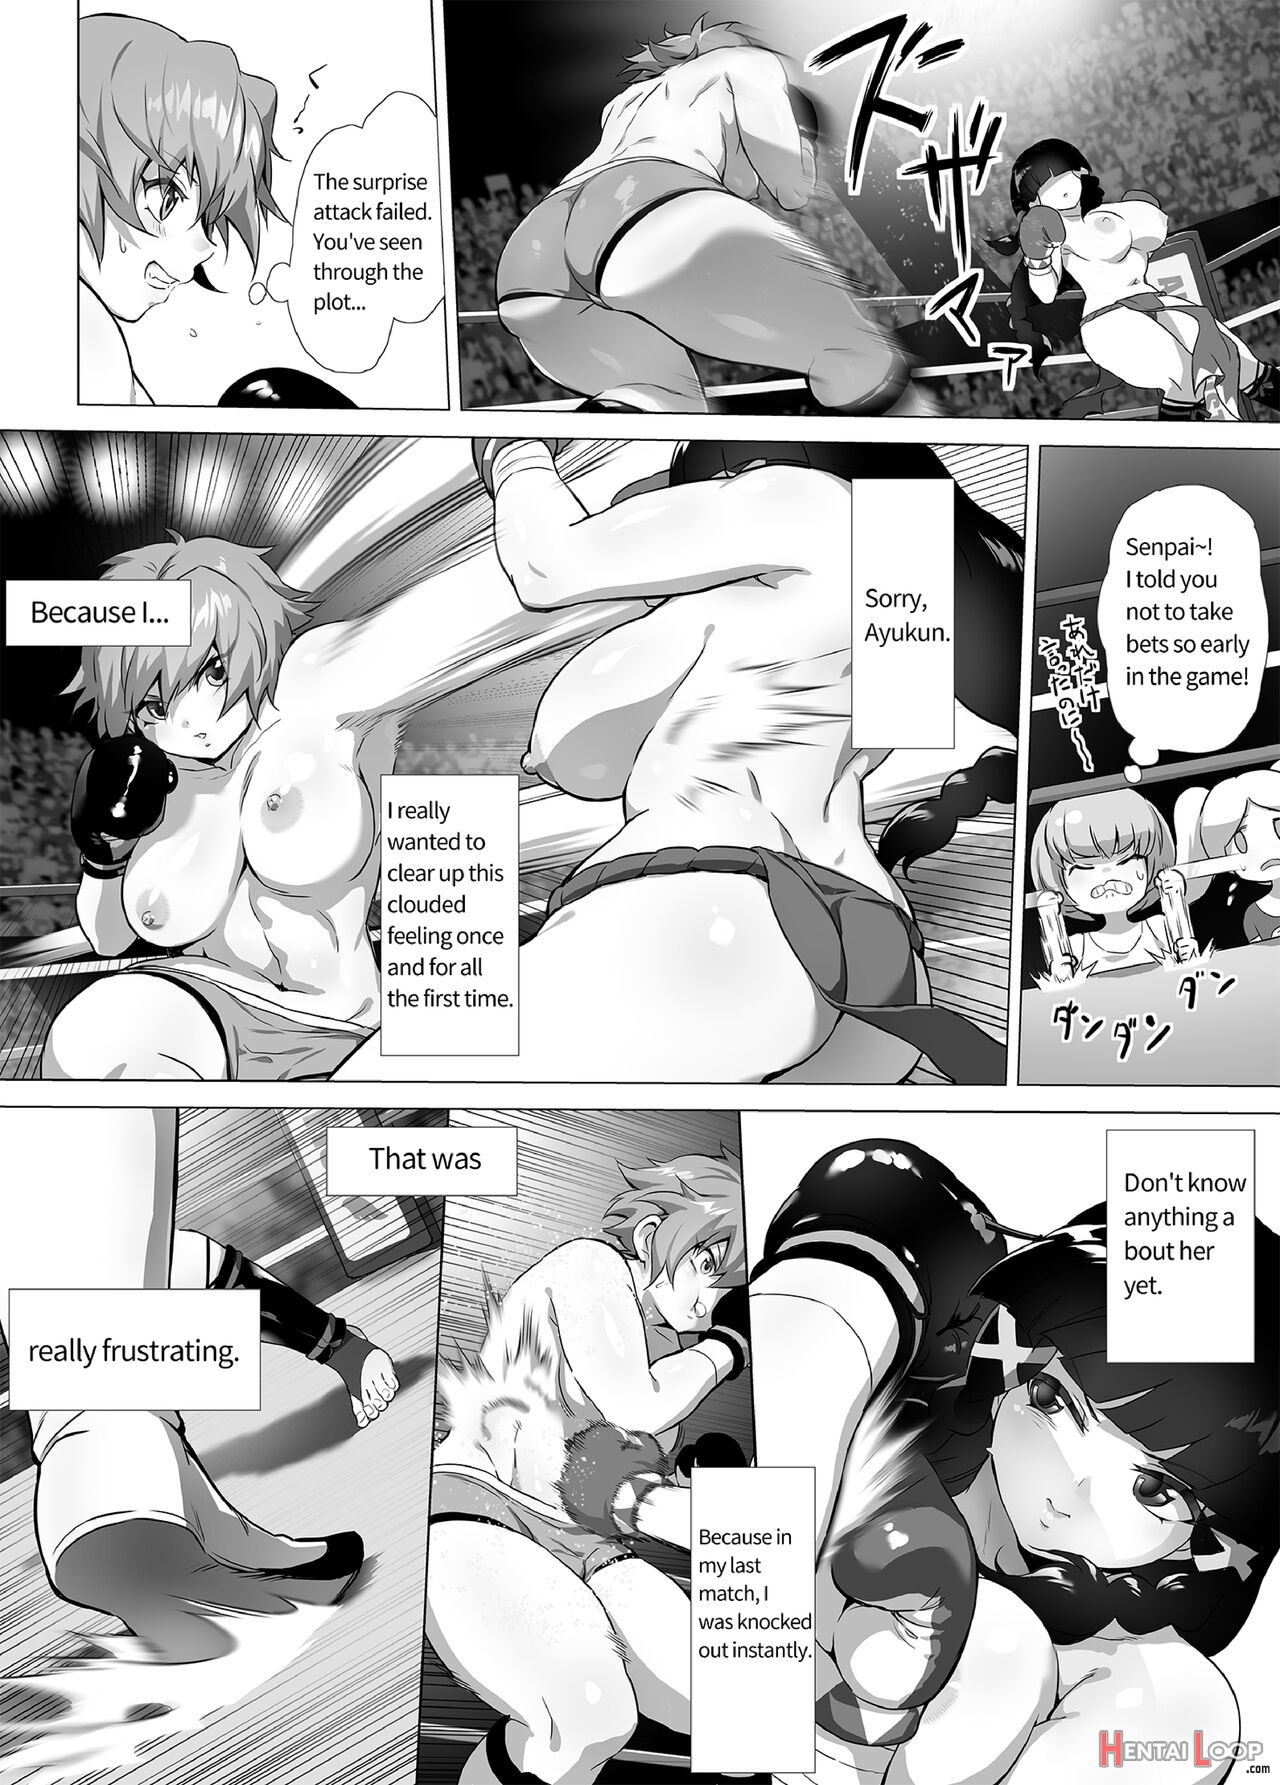 Mahiro Standup! Manga Ver. ~an New Foe Appears! Meet The Lovely Yuzuki~ page 20